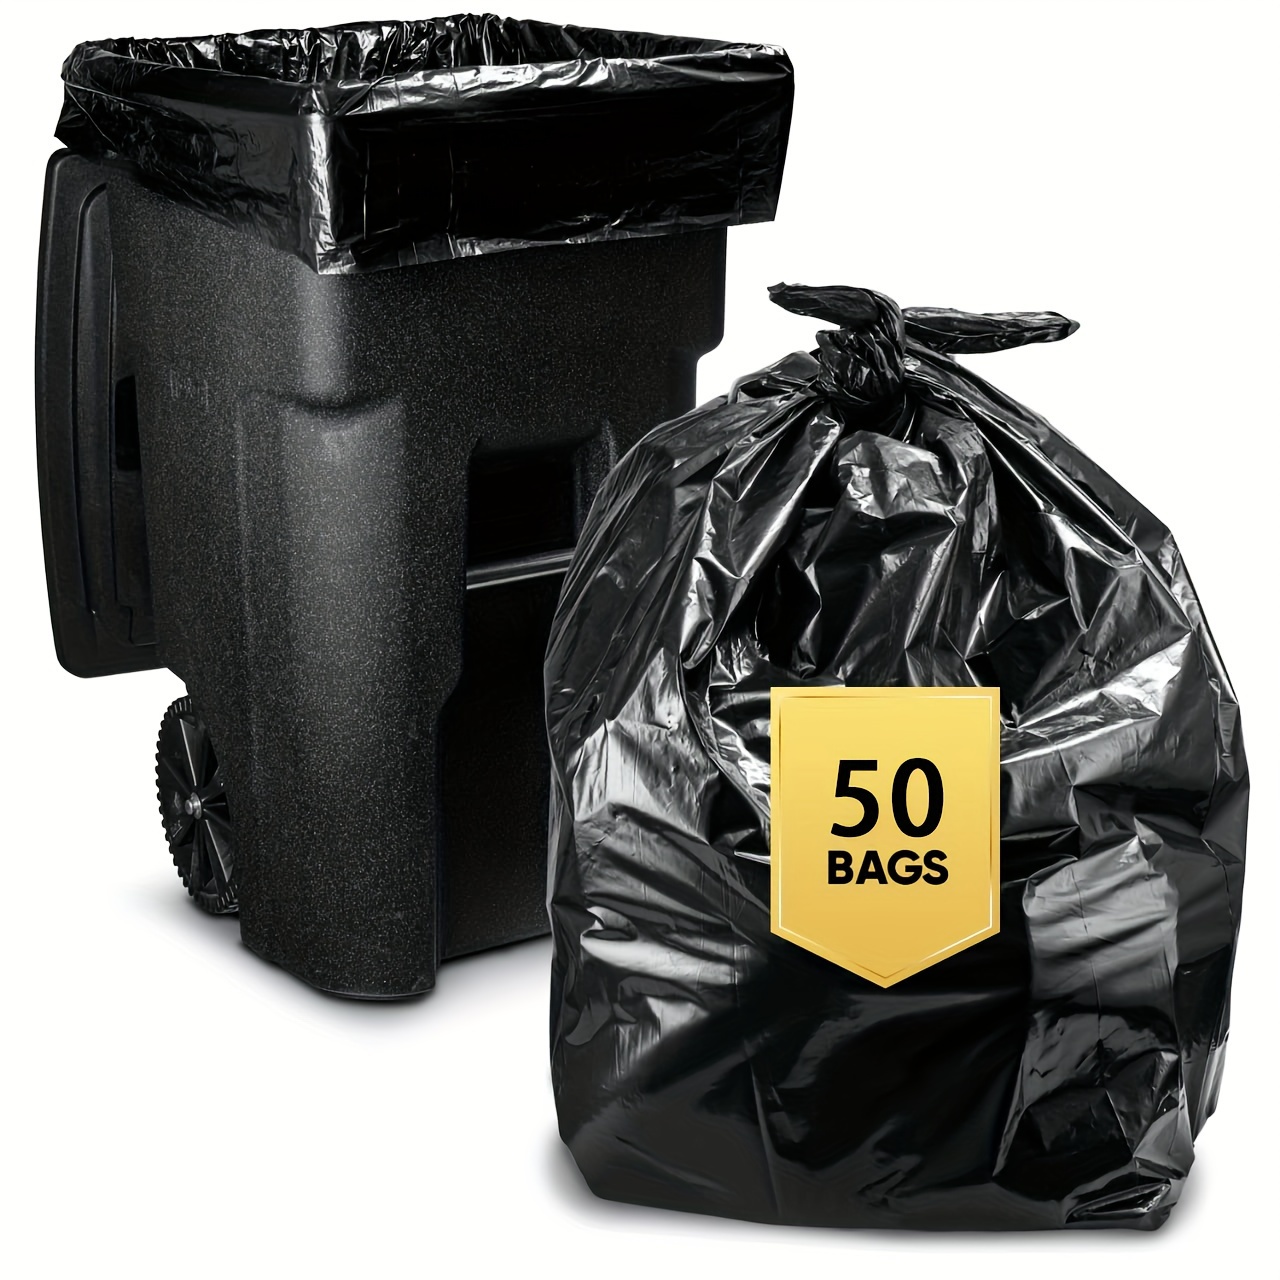 Disposable Garbage Bag, Capacity: 10-30 kg